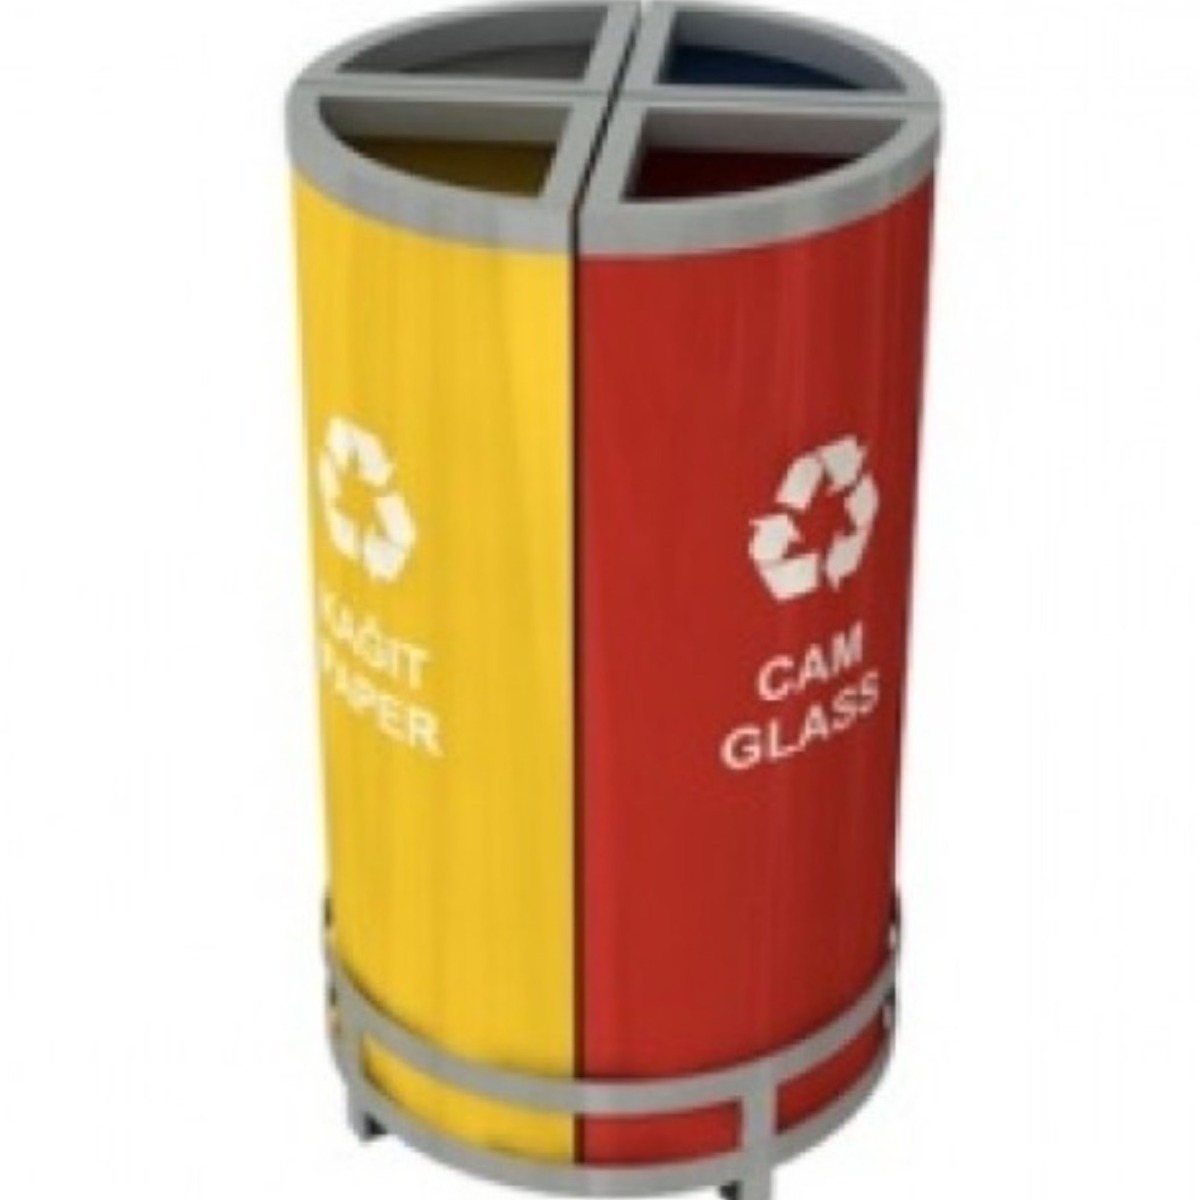 AB-782 Recycle Bin product logo